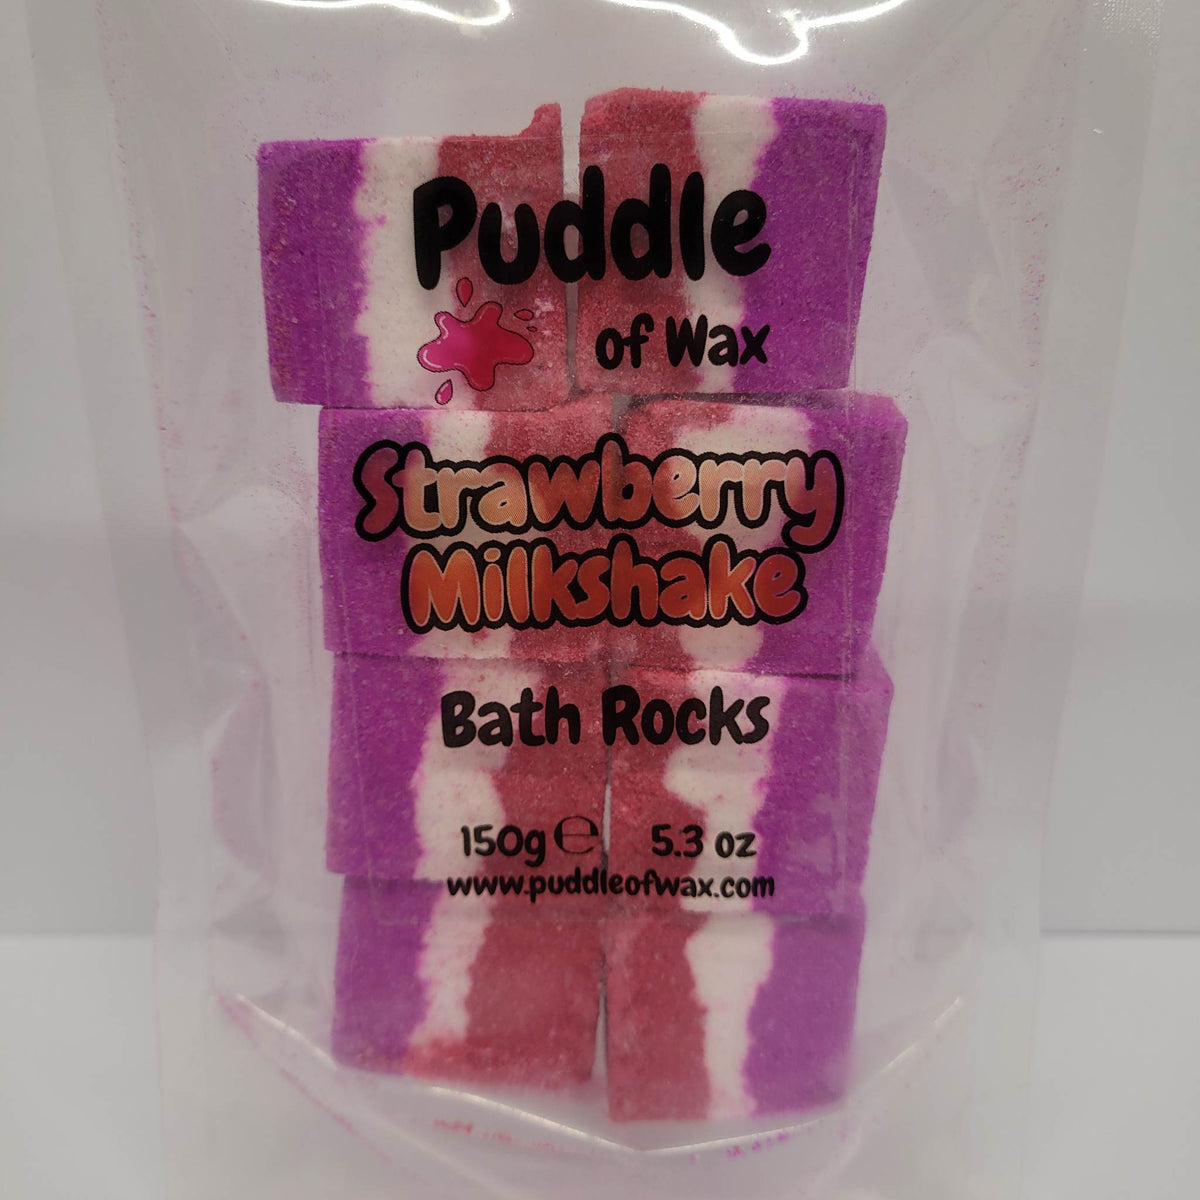 Strawberry Milkshake Bath Rocks